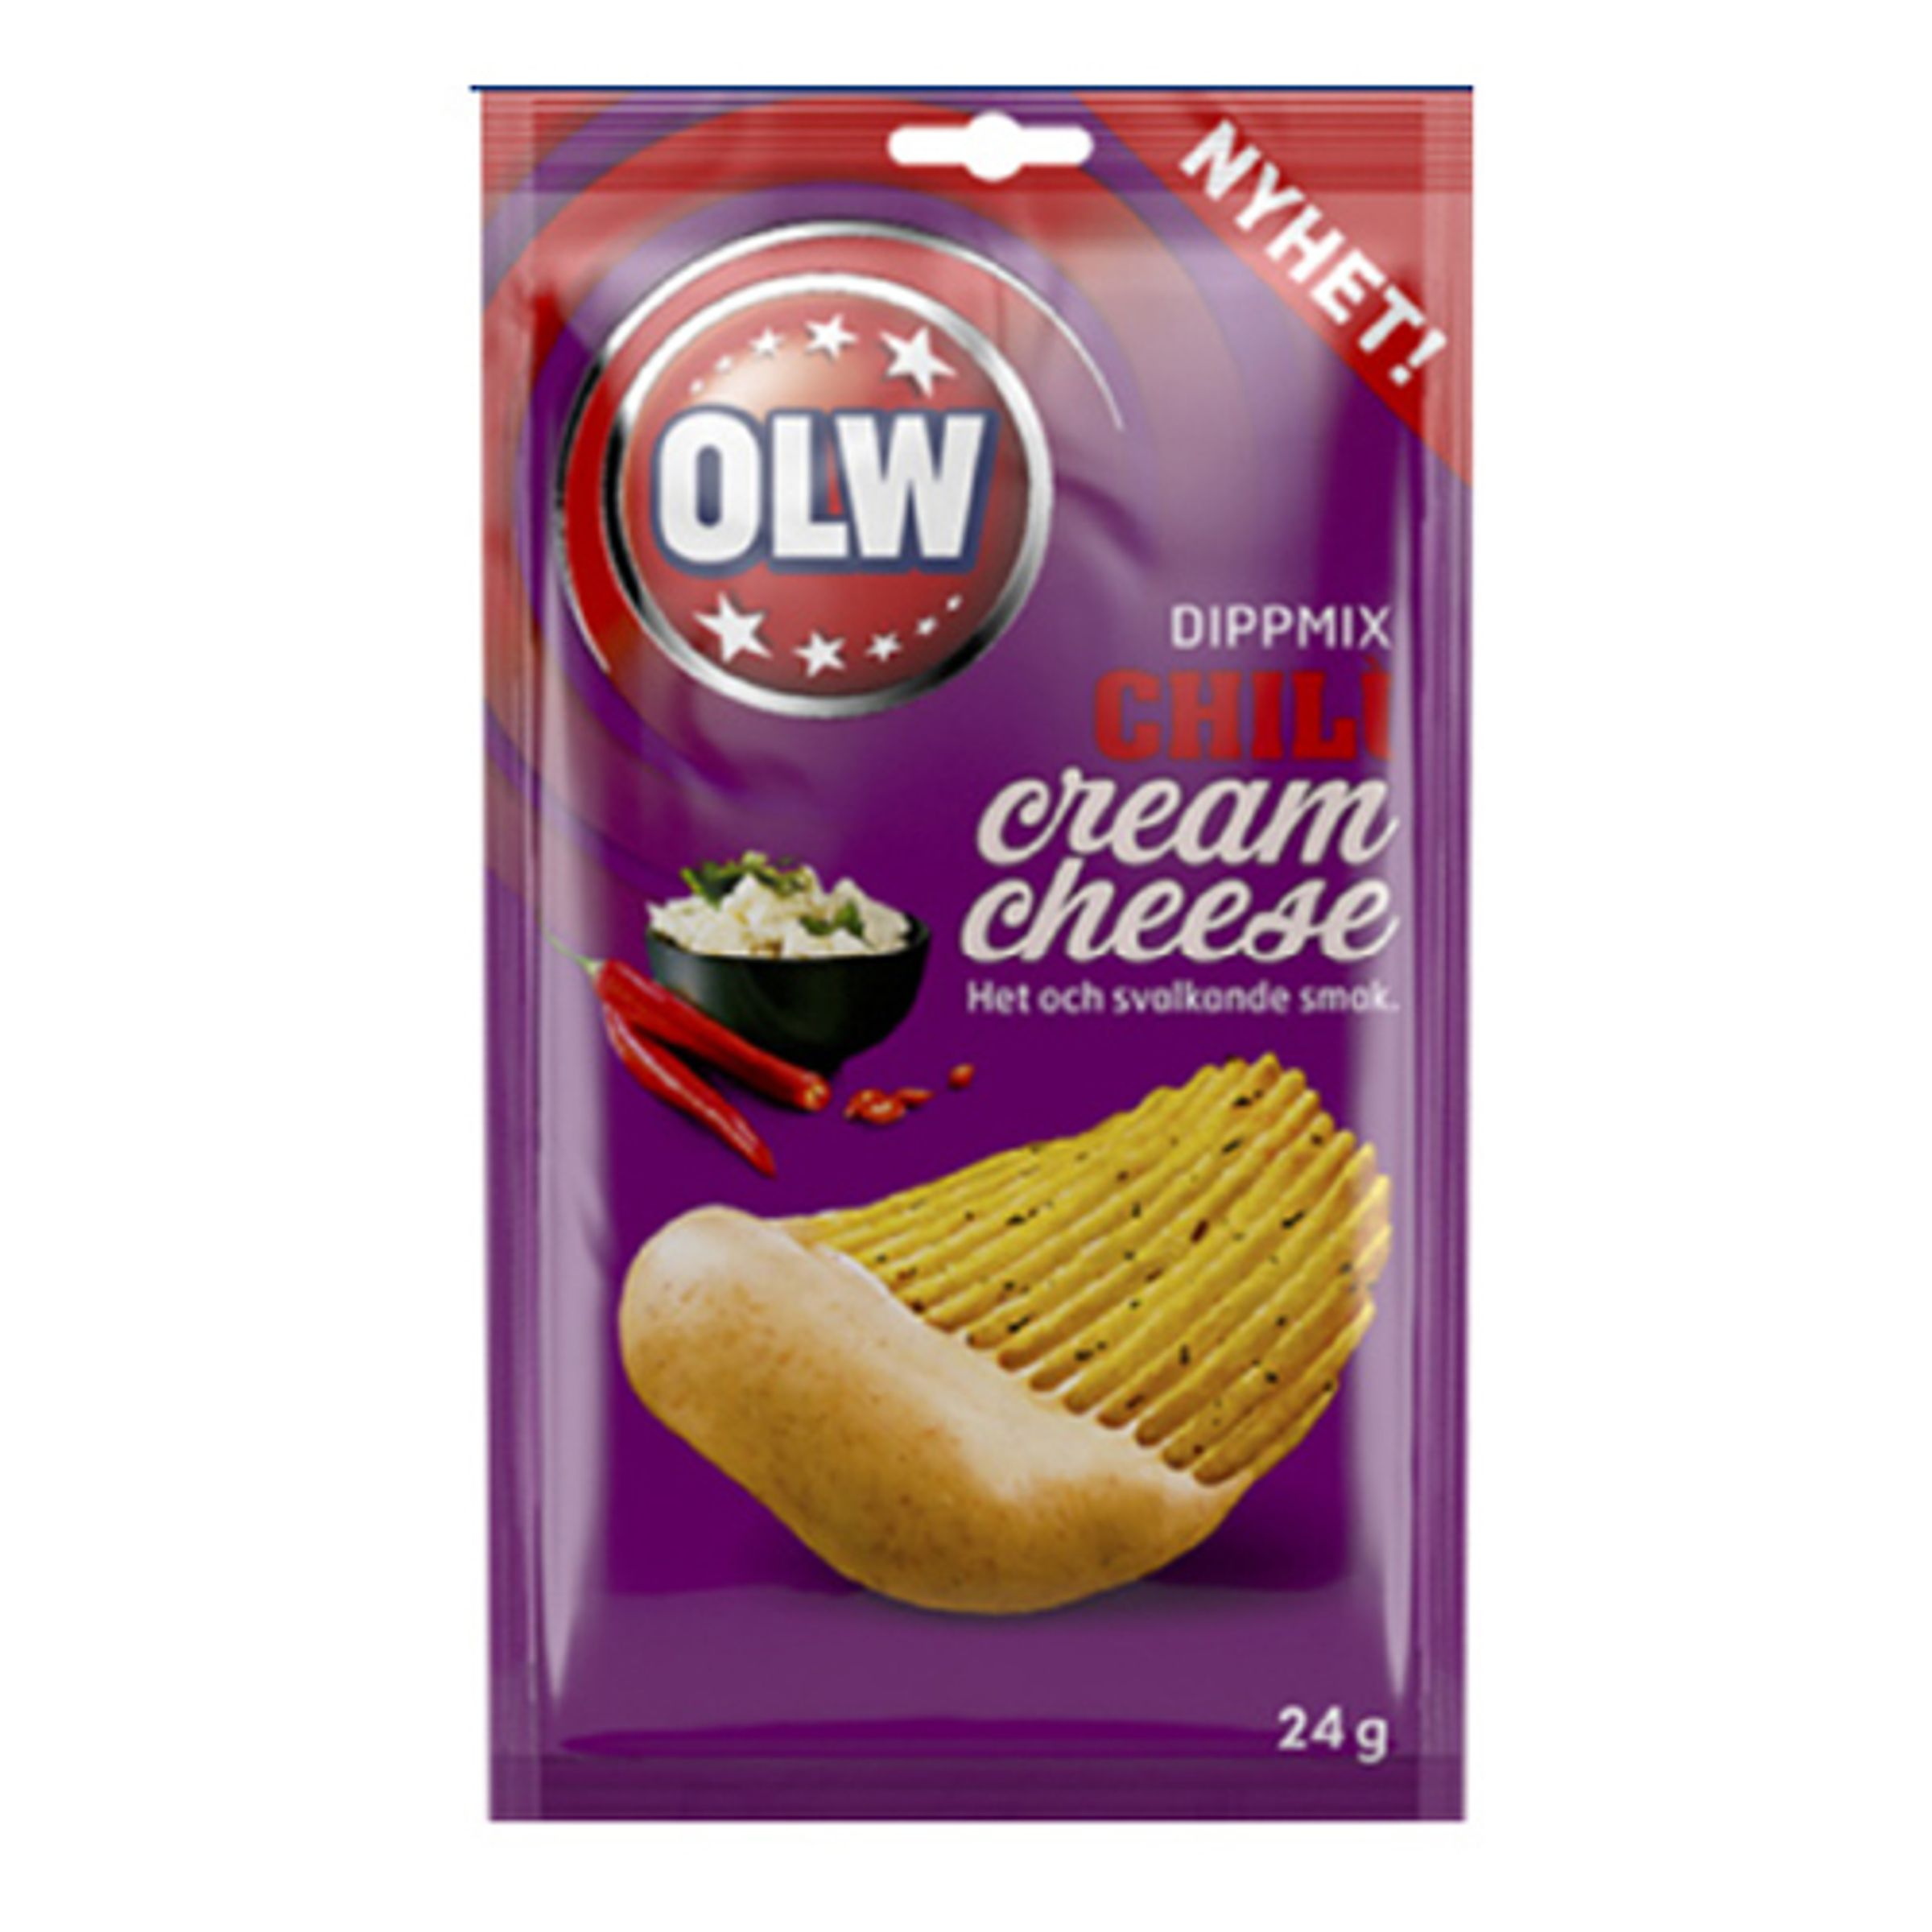 OLW Dipmix Chili Cream Cheese